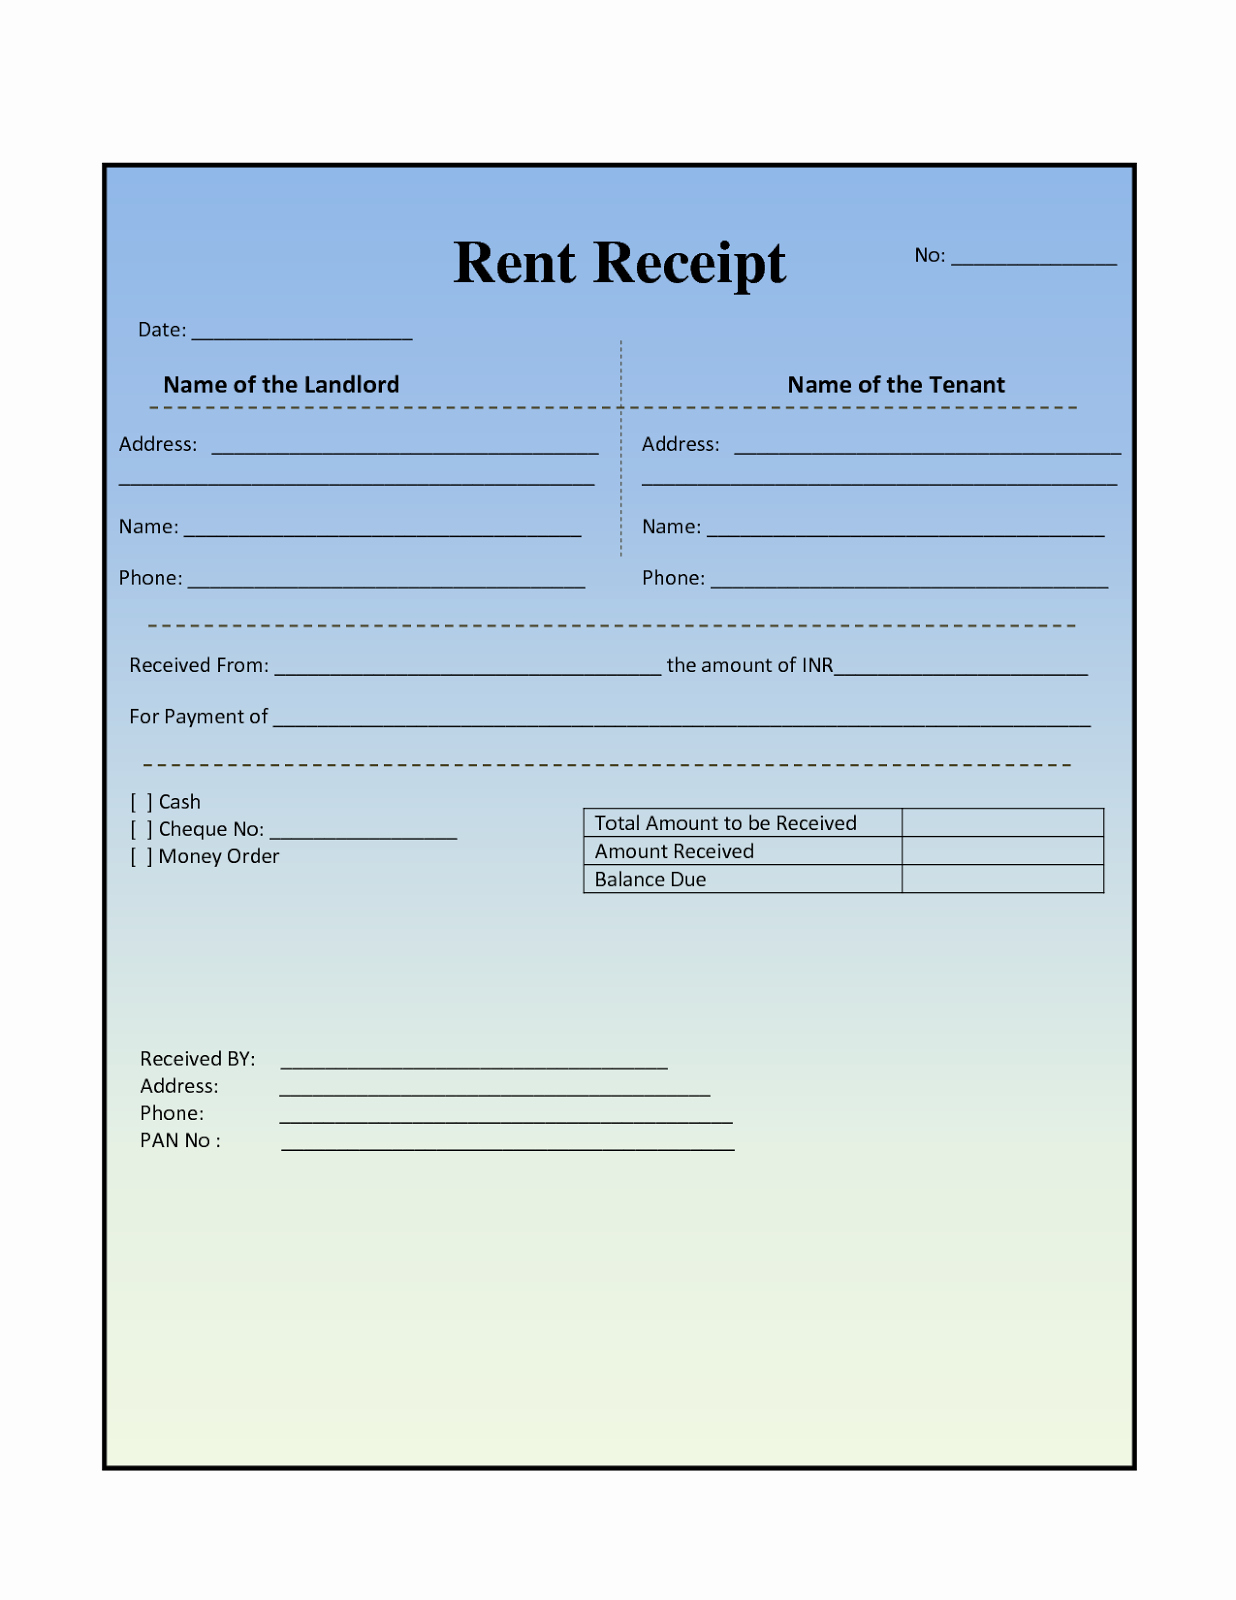 Rent Invoice Template Excel Elegant House Rental Invoice Template In Excel format Rent